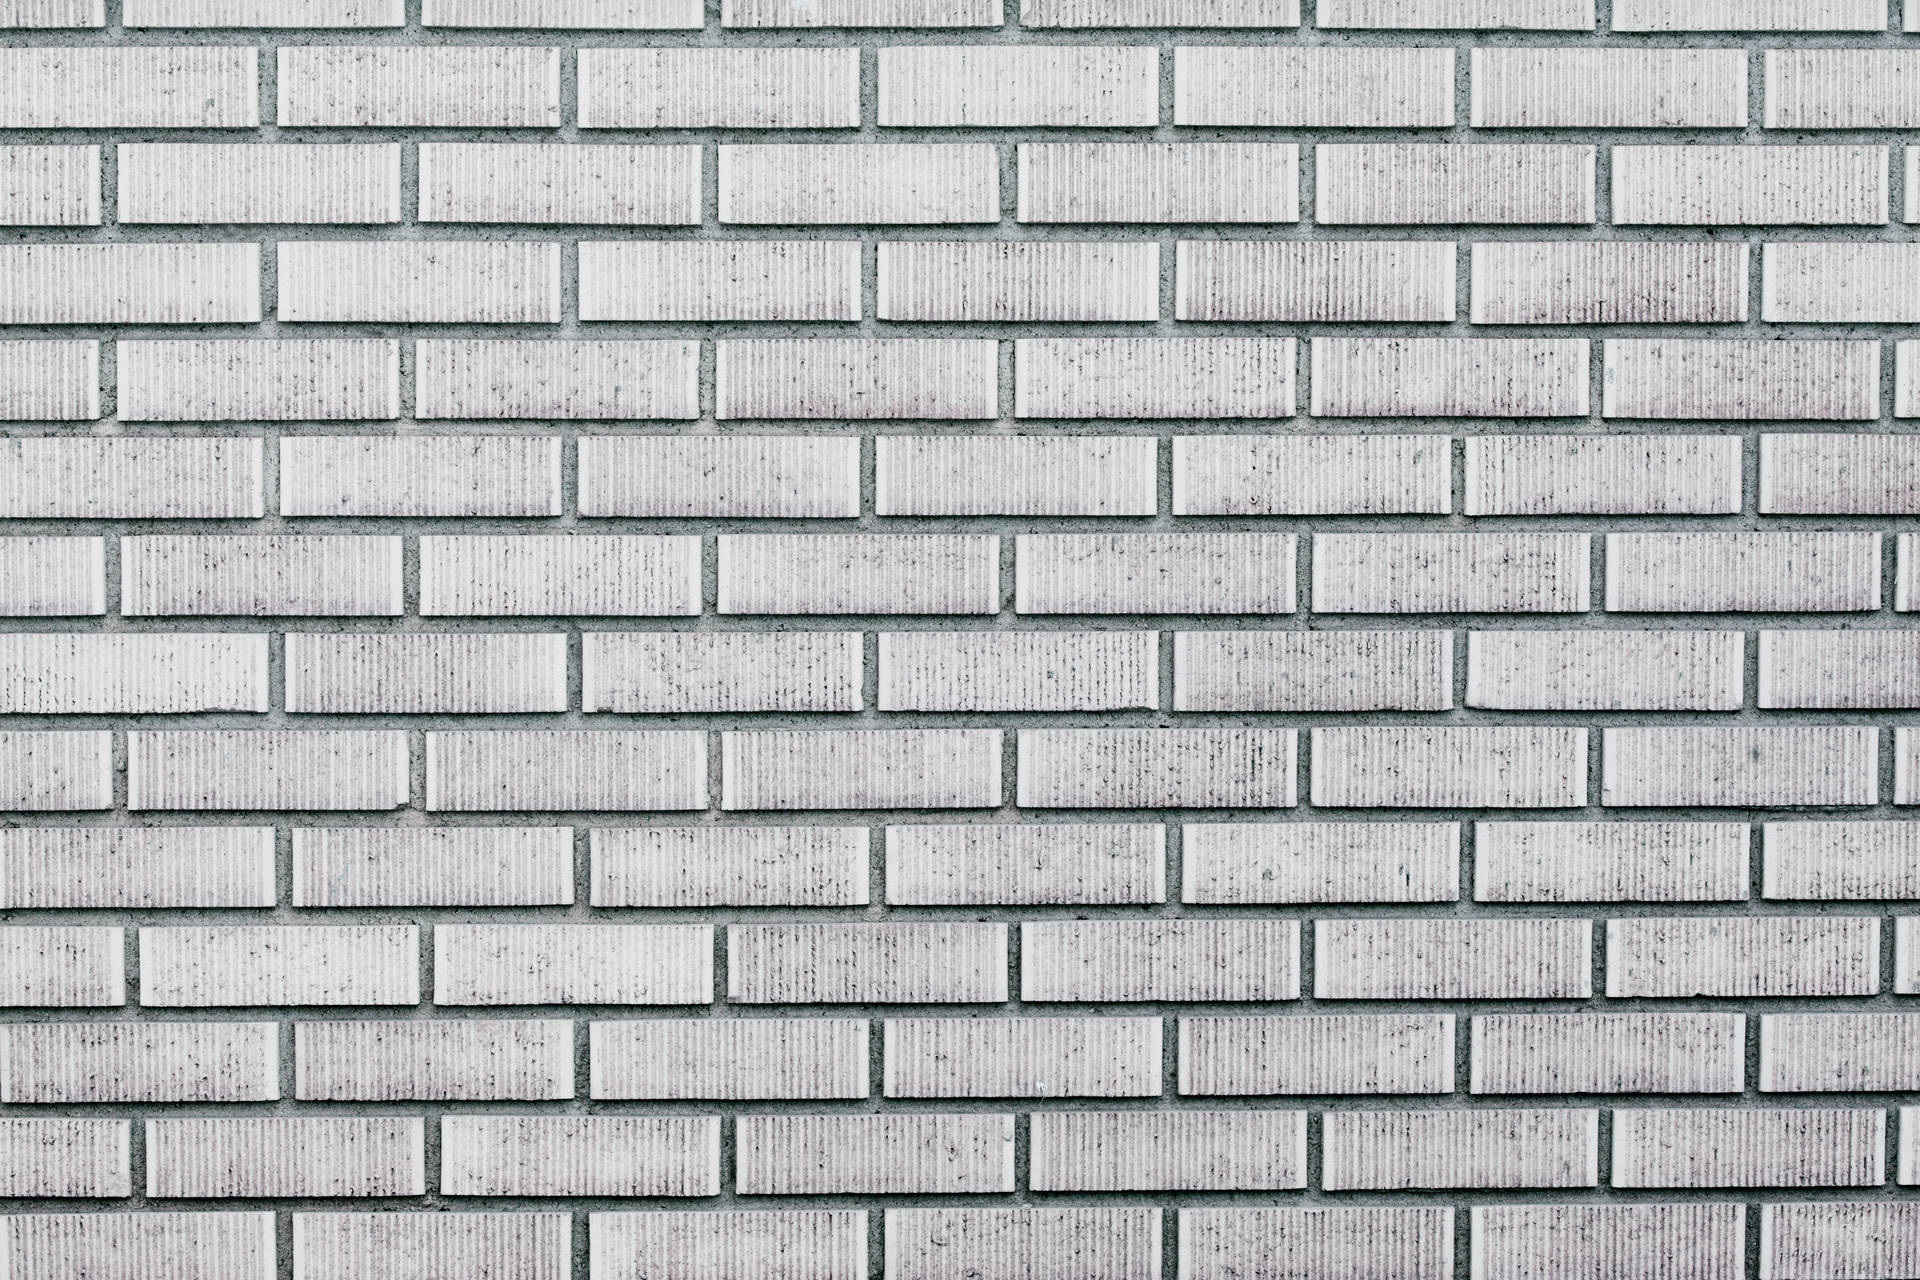 5616X3744 White Brick Wallpaper and Background